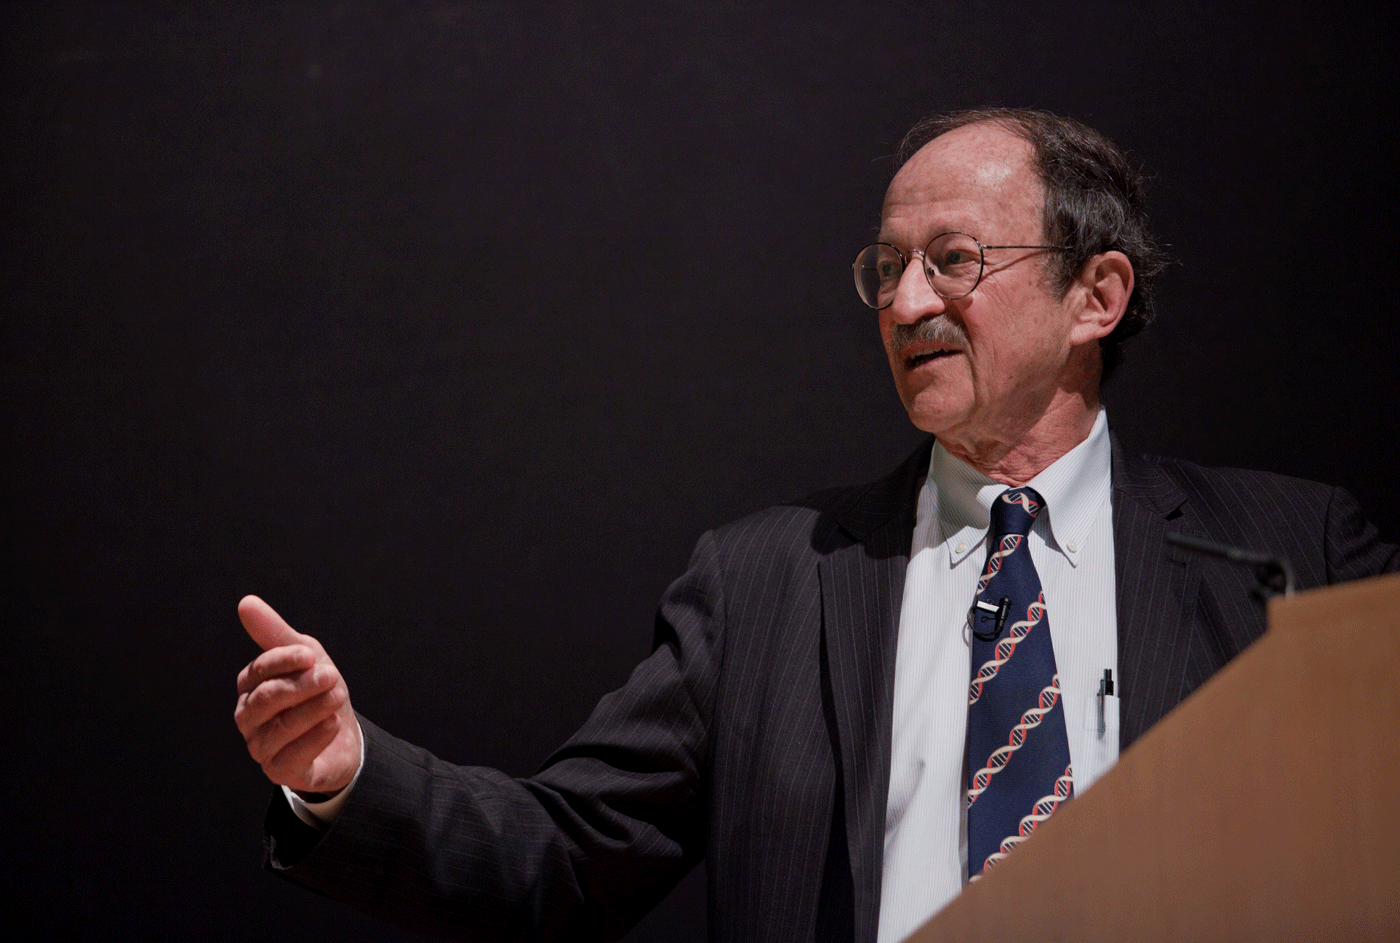 King Lecture 2016 - Dr Harold Varmus 's image